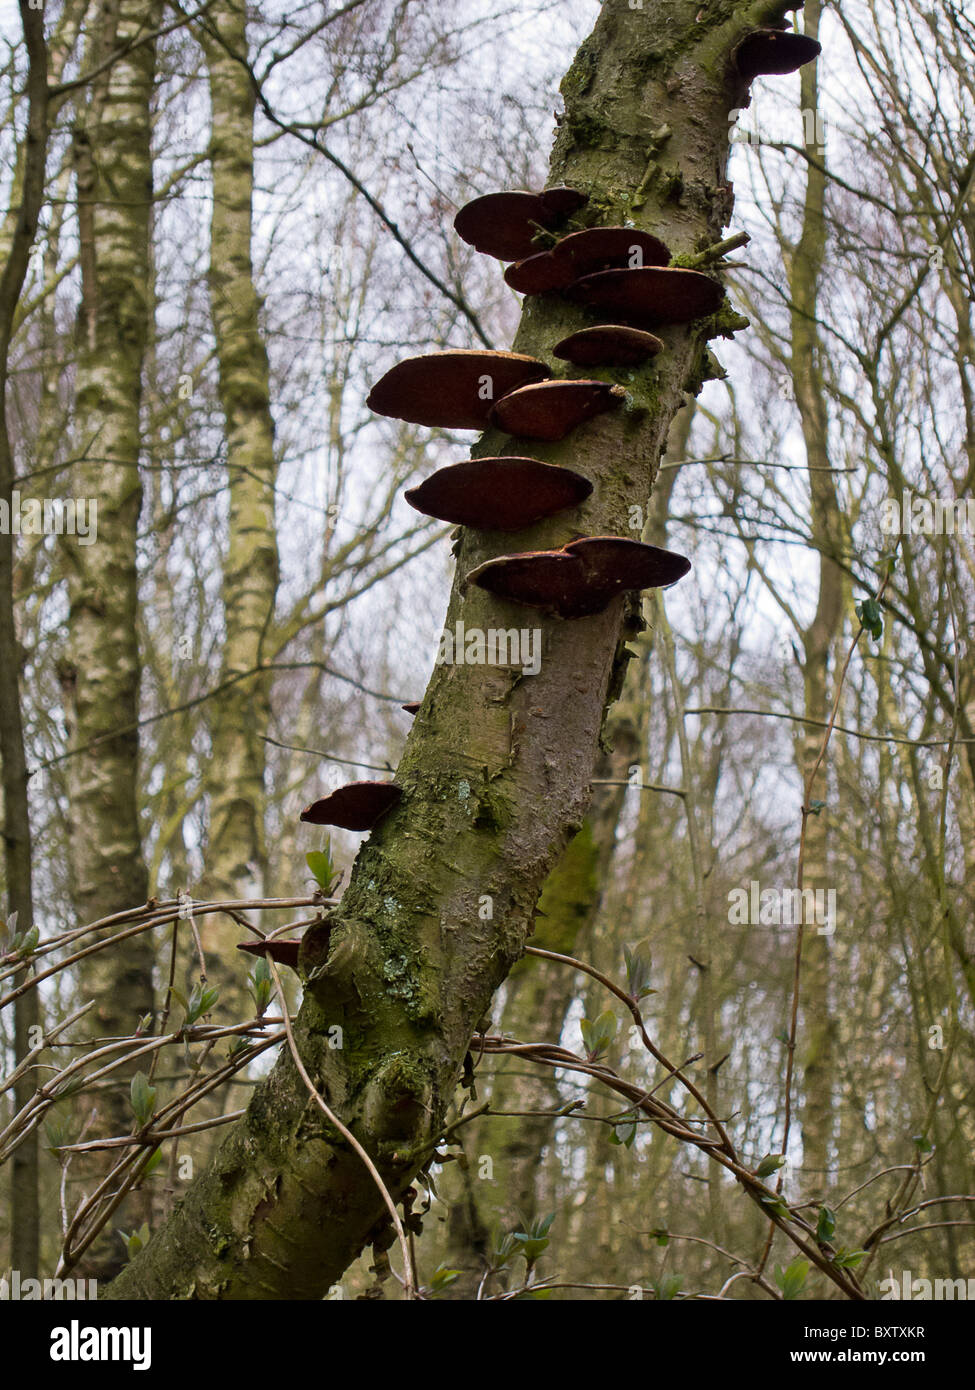 Bracket fungus on tree trunk, from below Stock Photo